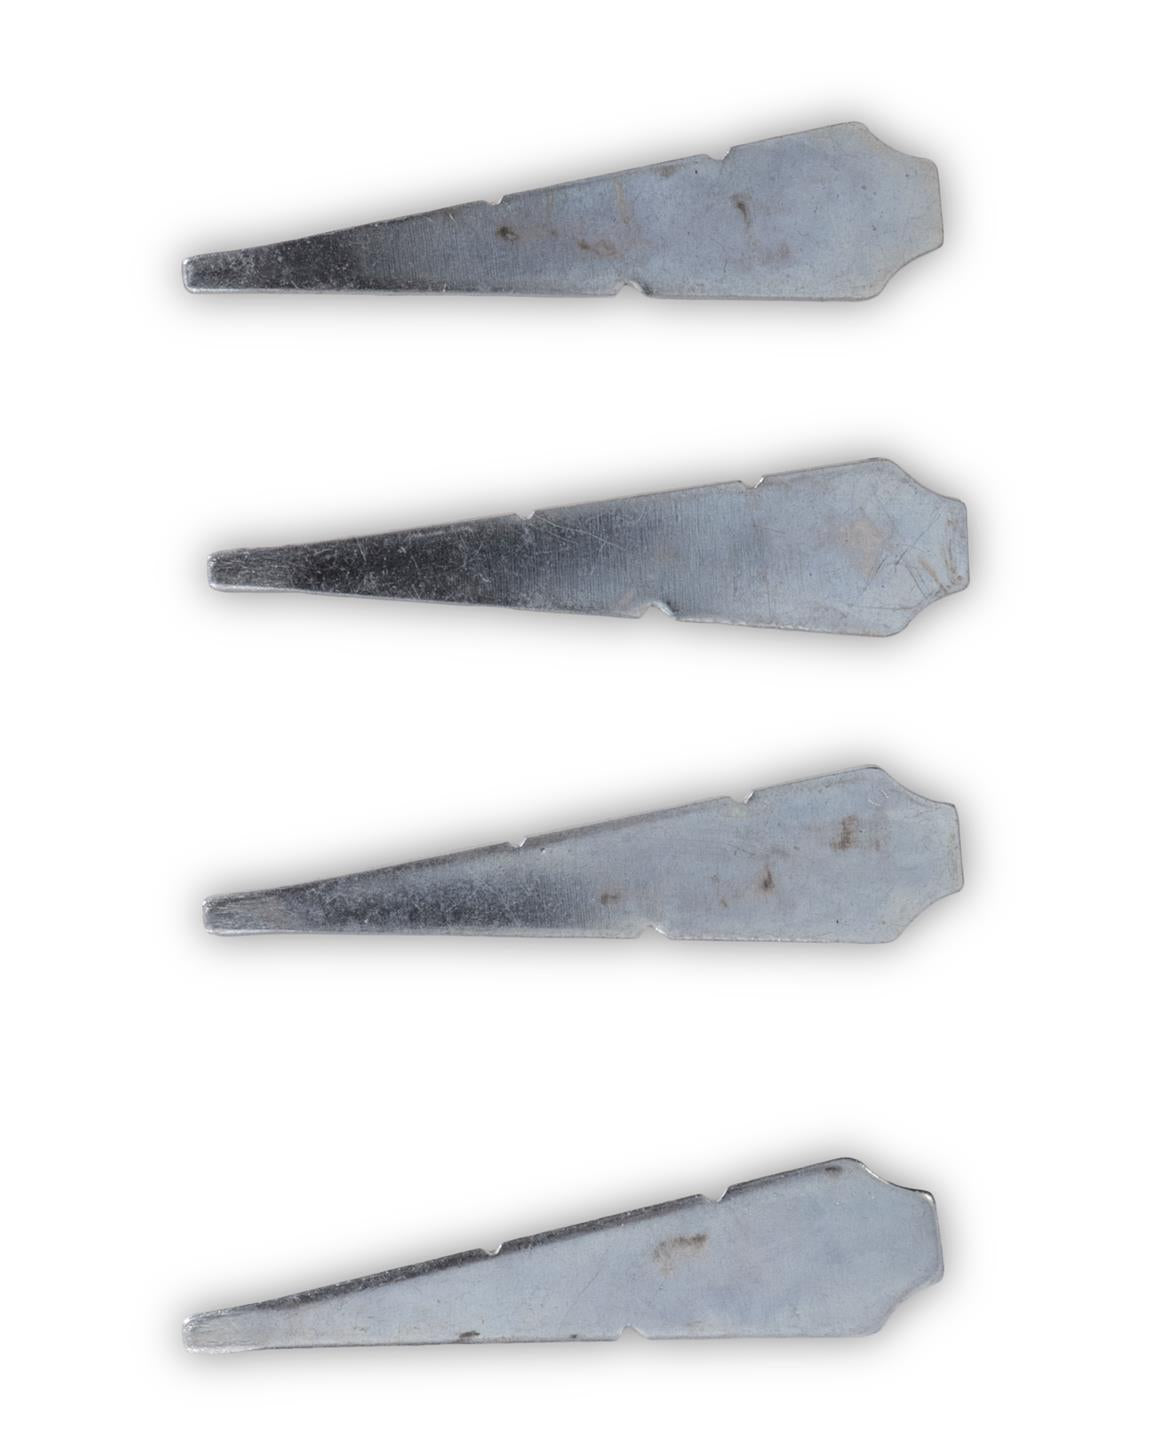 Marshalltown 11735 Masonry Line Pins (4-Bag)